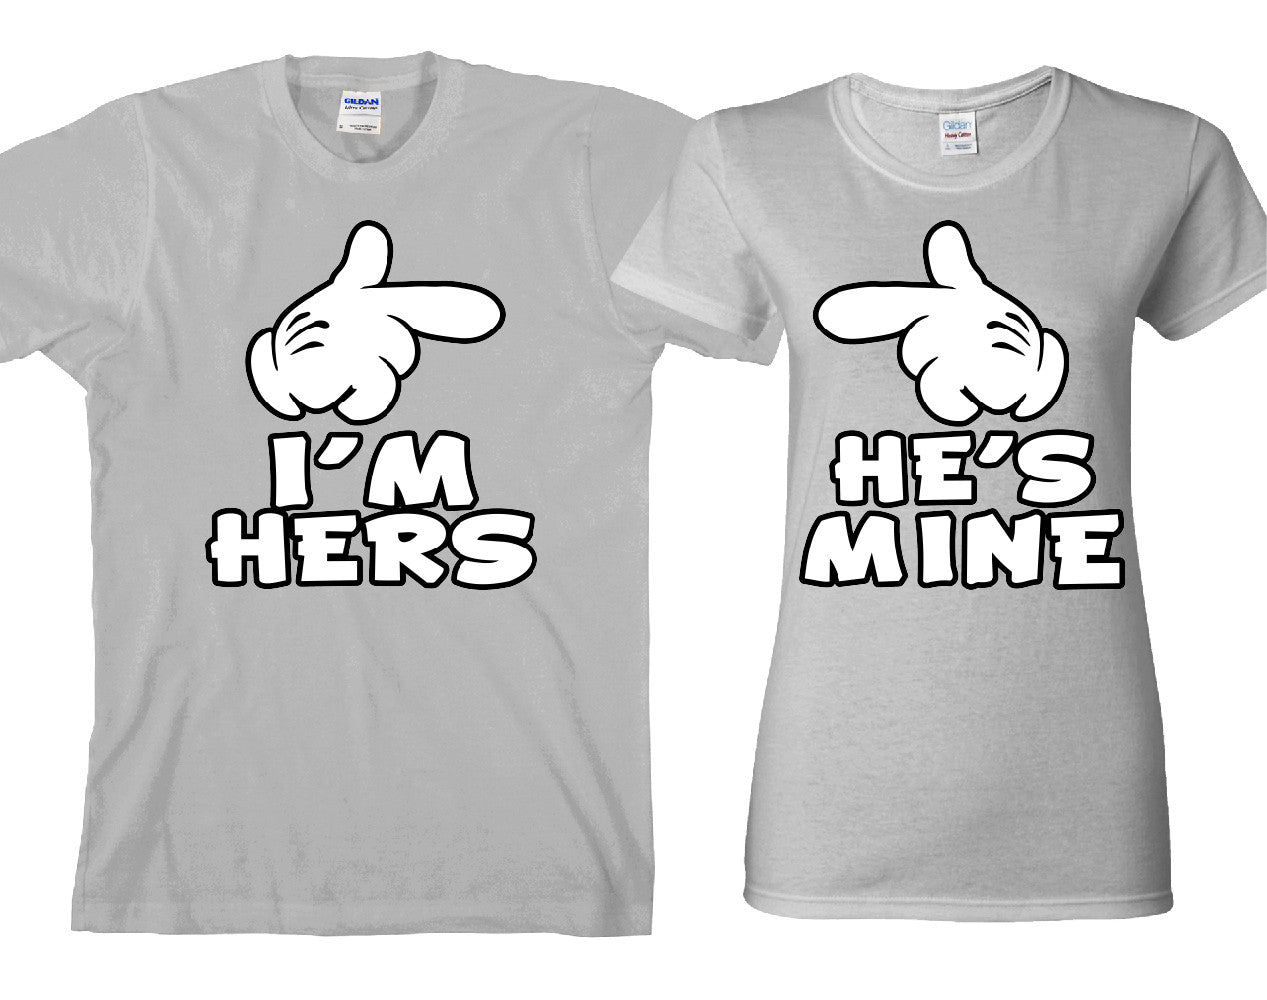 I'm Her's - He's Mine 